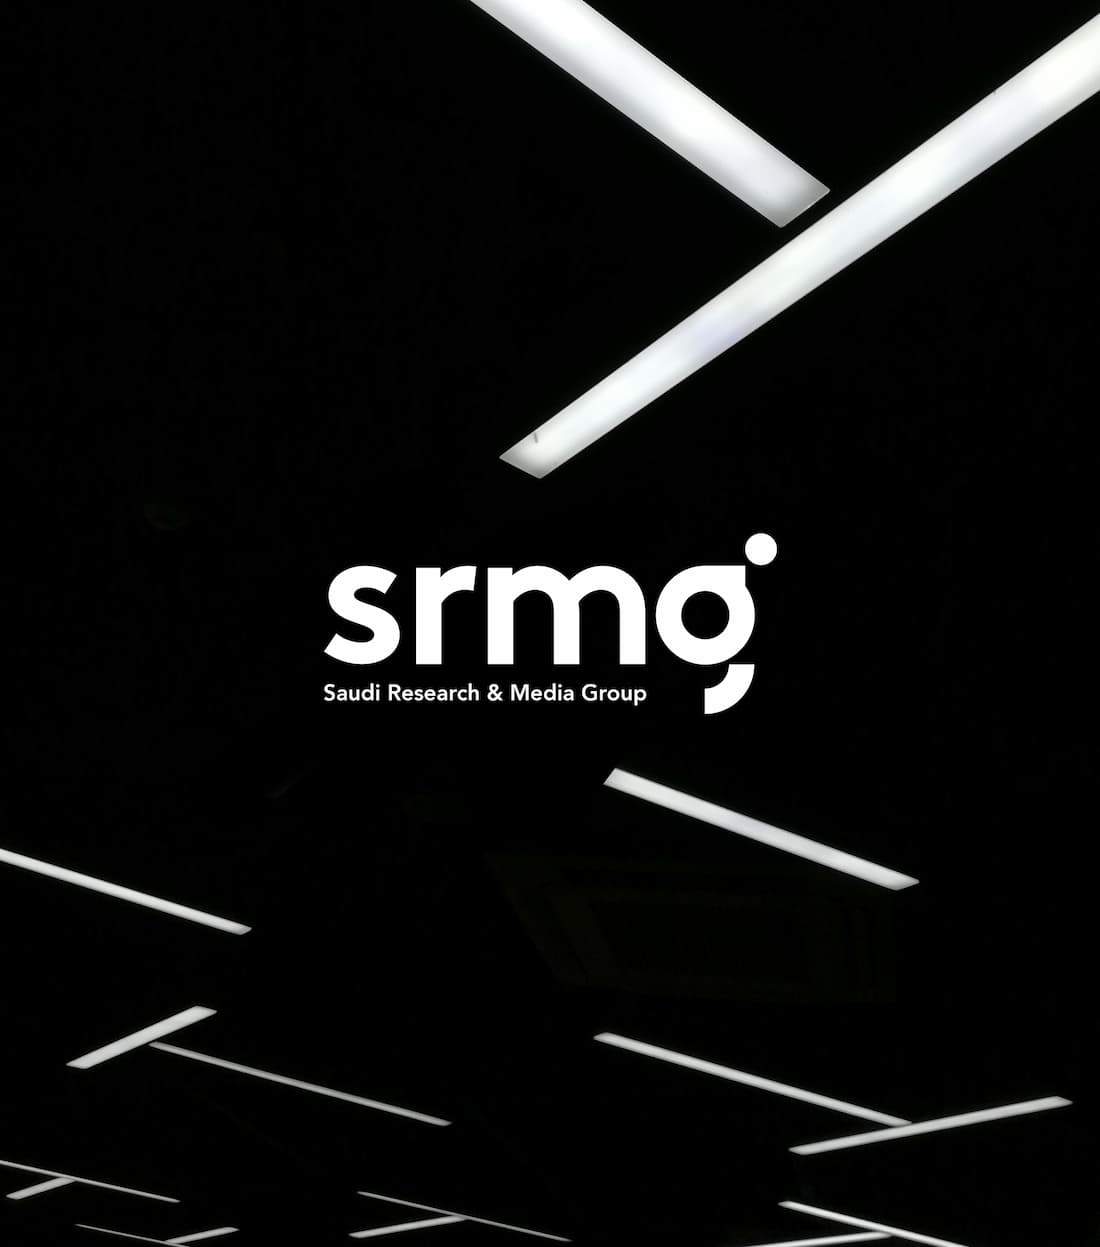 SRMG announces new company name